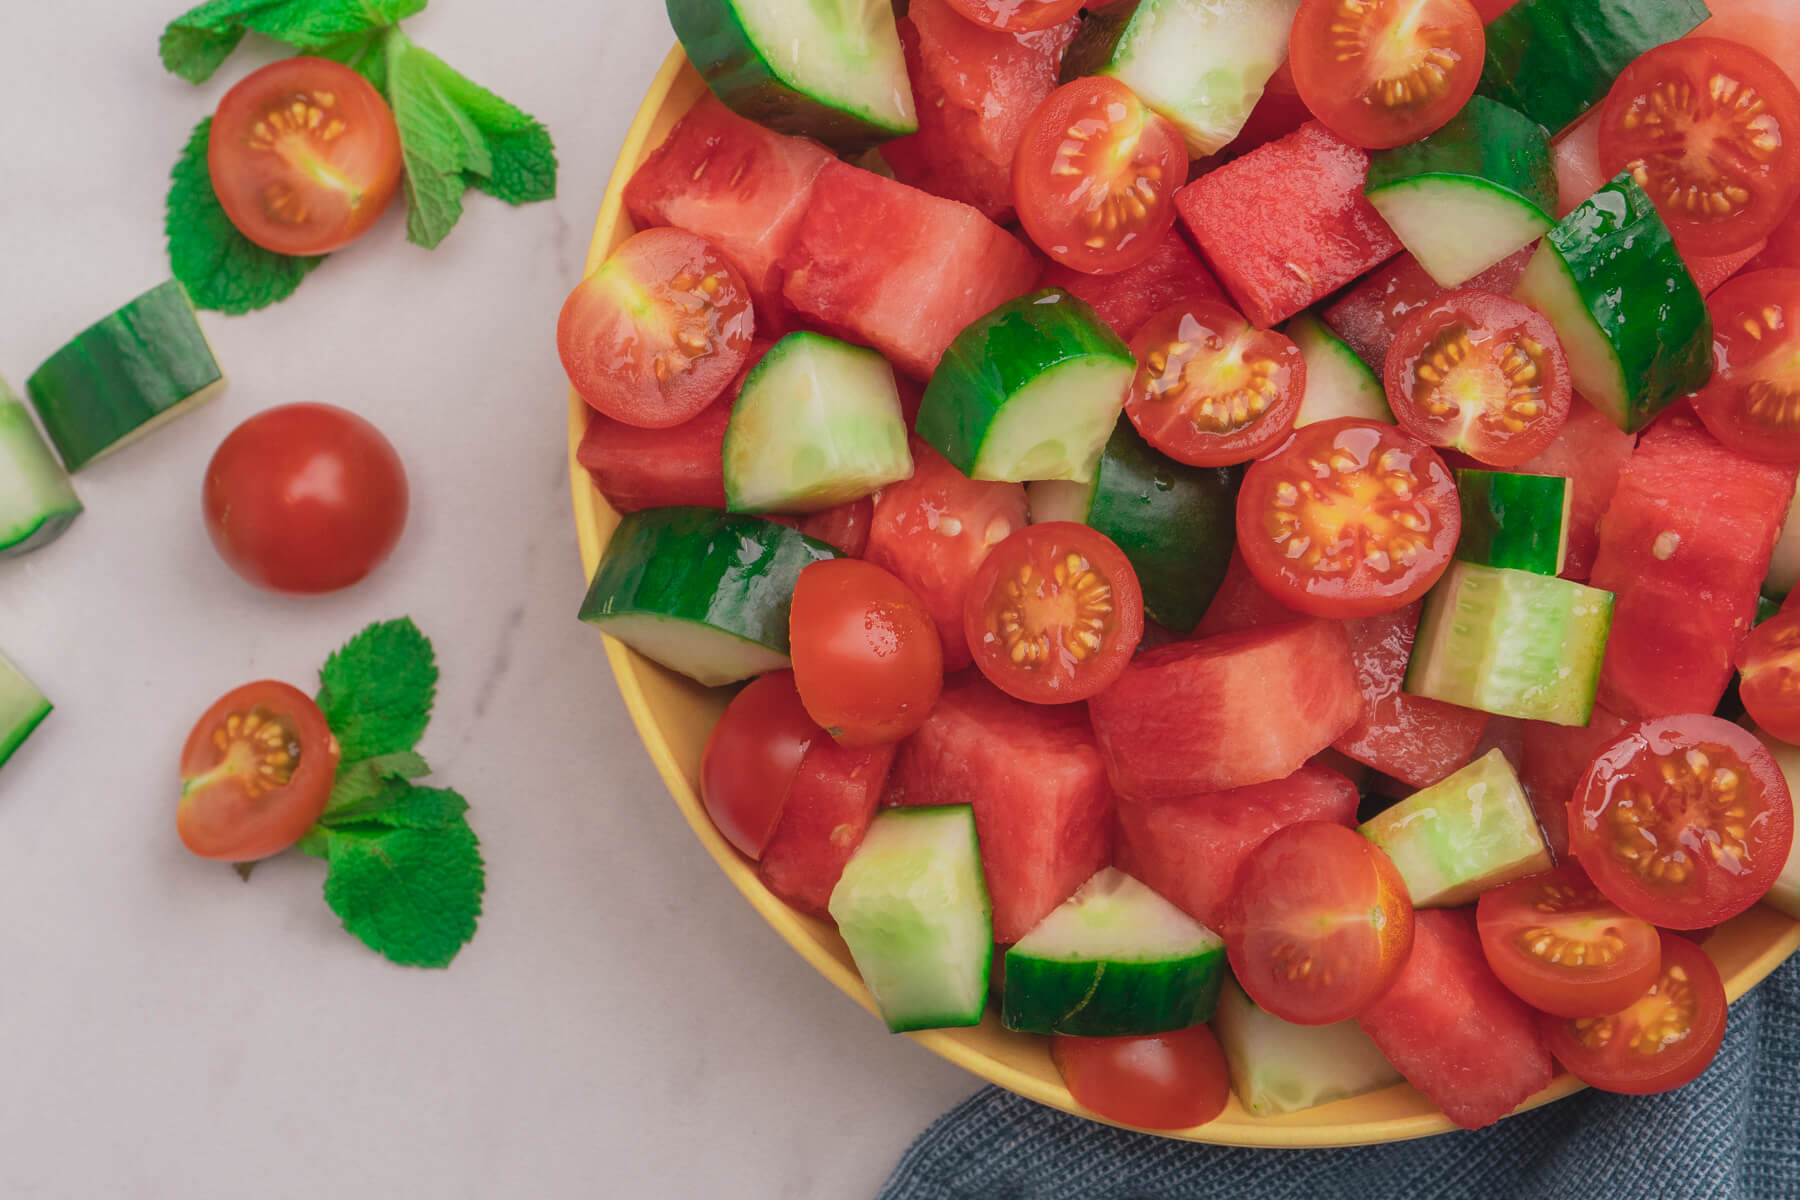 Tomato and Watermelon salad